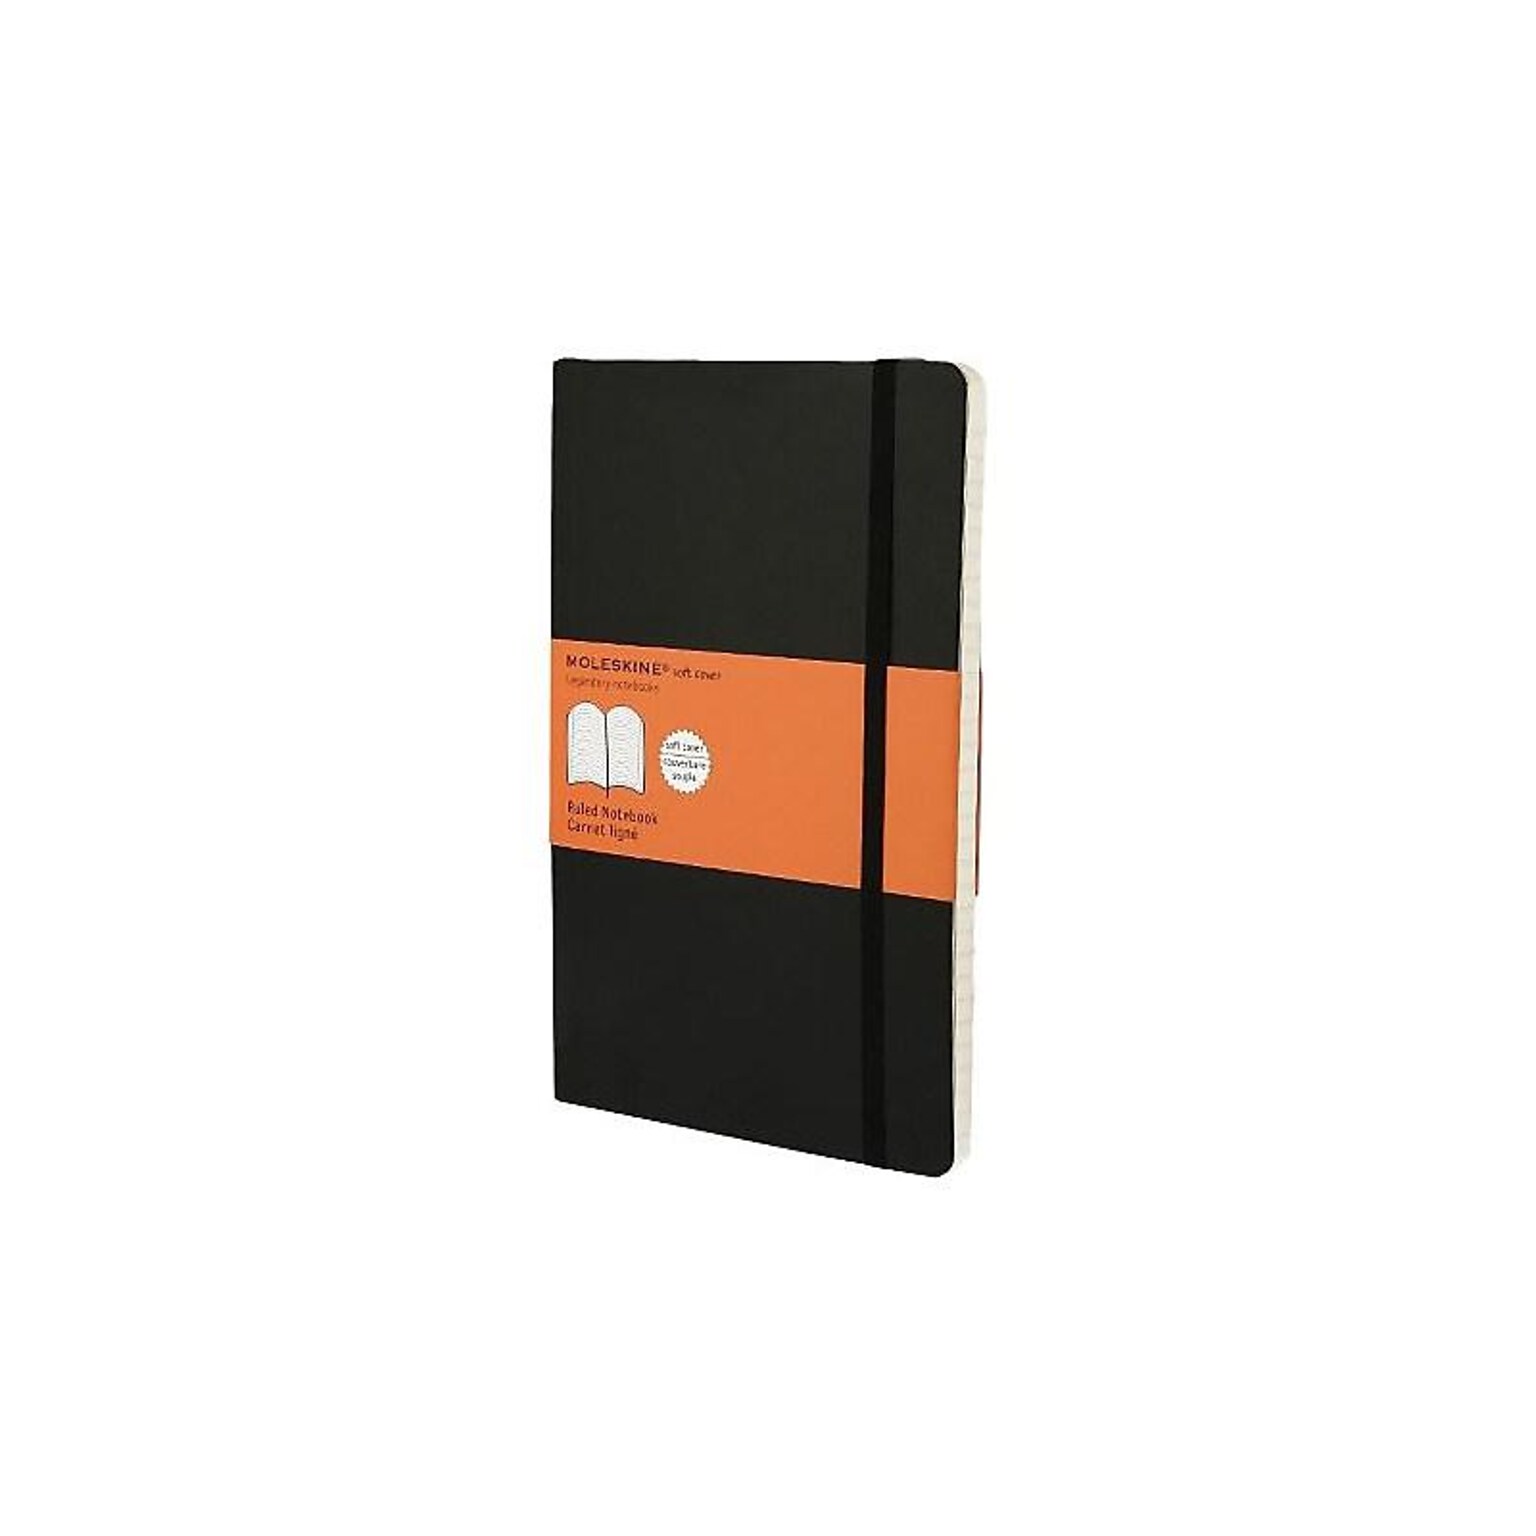 Moleskine Professional Notebooks, 9.75 x 7.5, College Ruled, 96 Sheets, Black (707223)